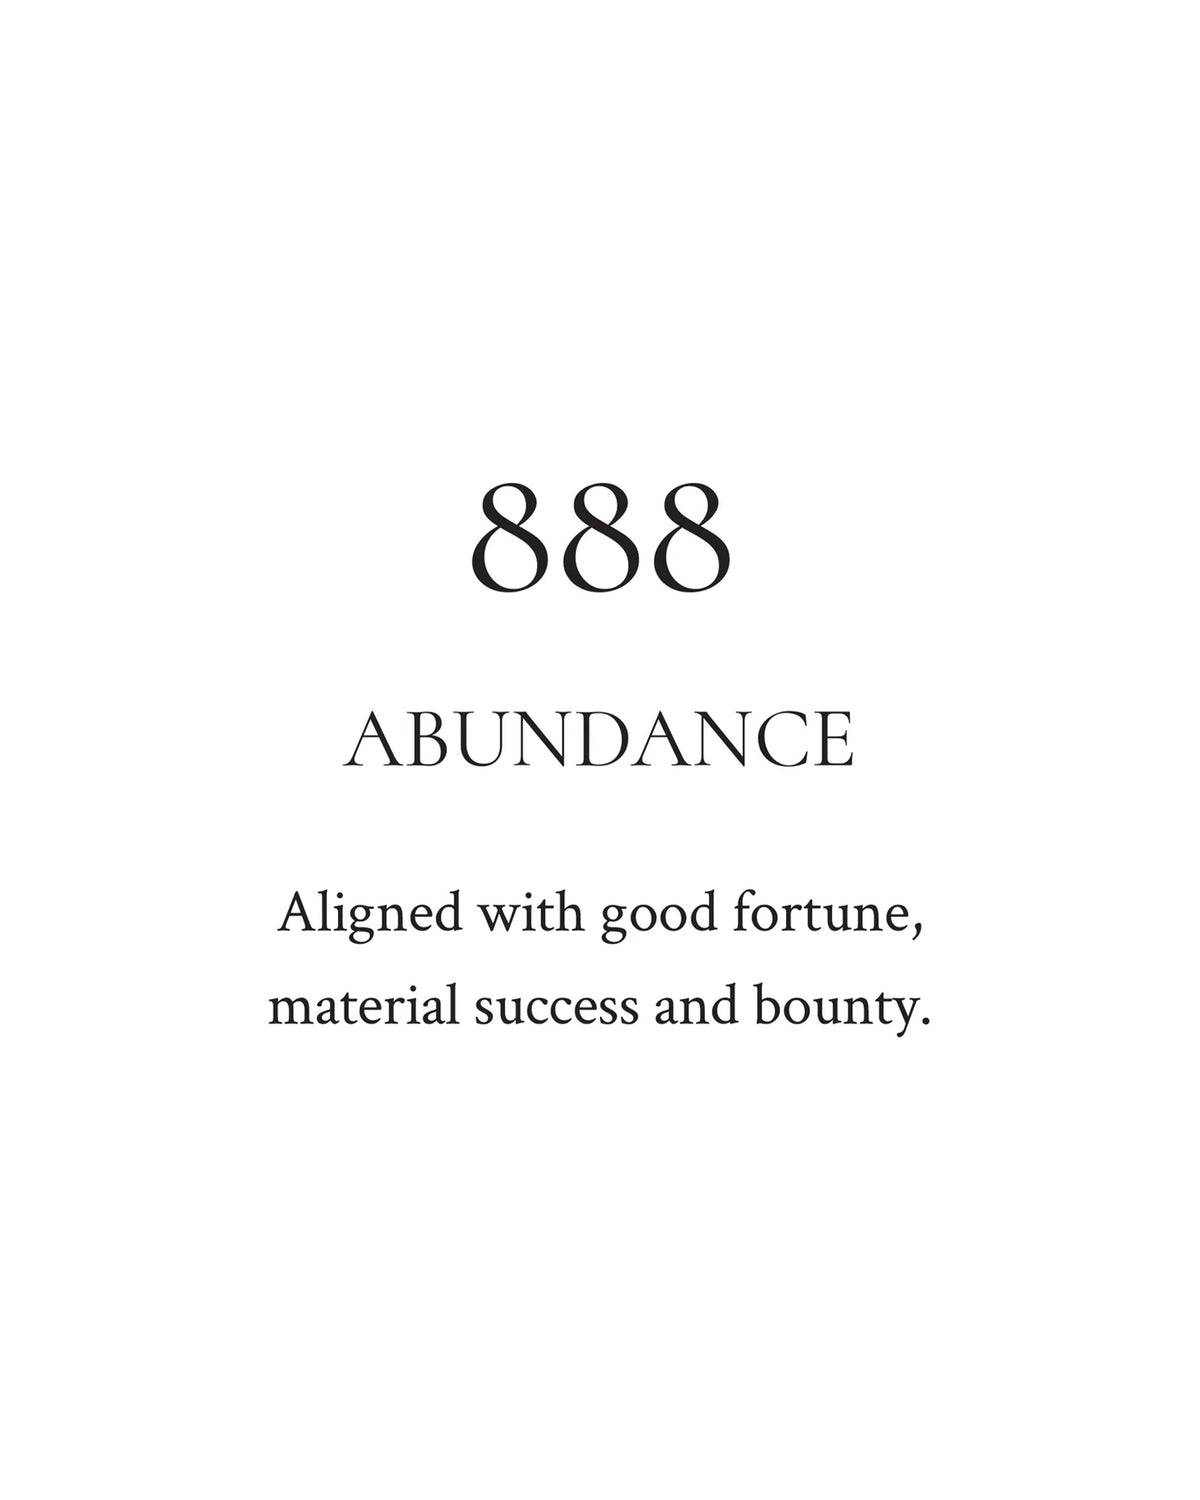 888 / Abundance / Red Currant & Rose